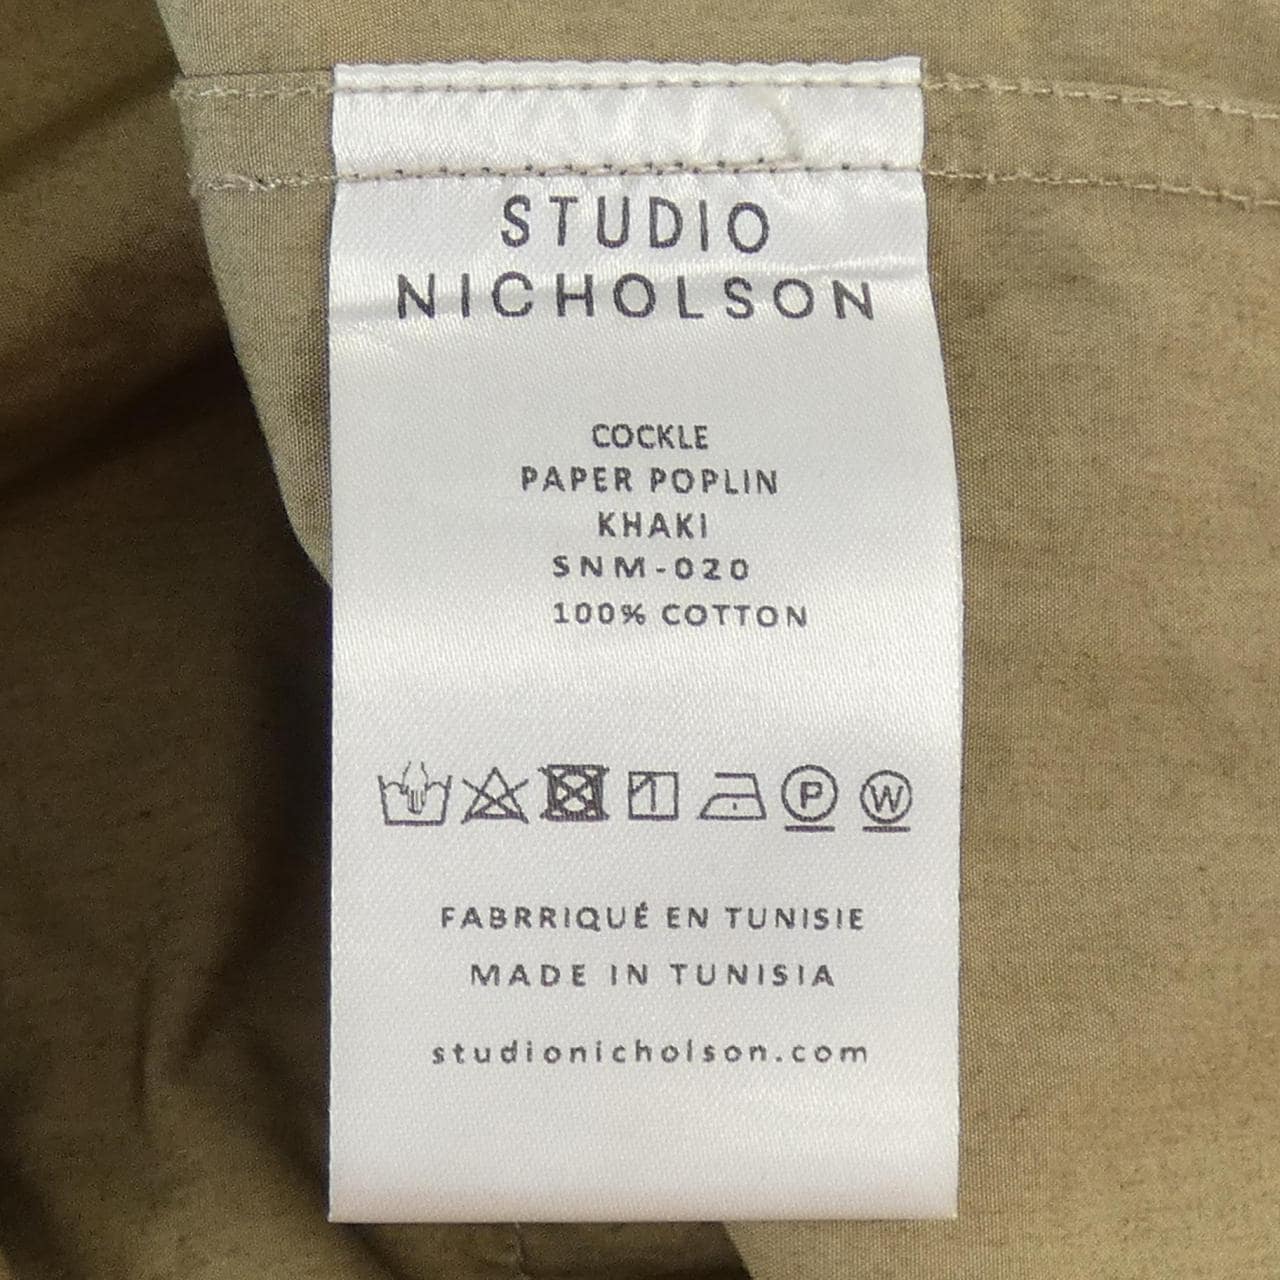 Studio Nicholson STUDIO NICHOLSON shirt